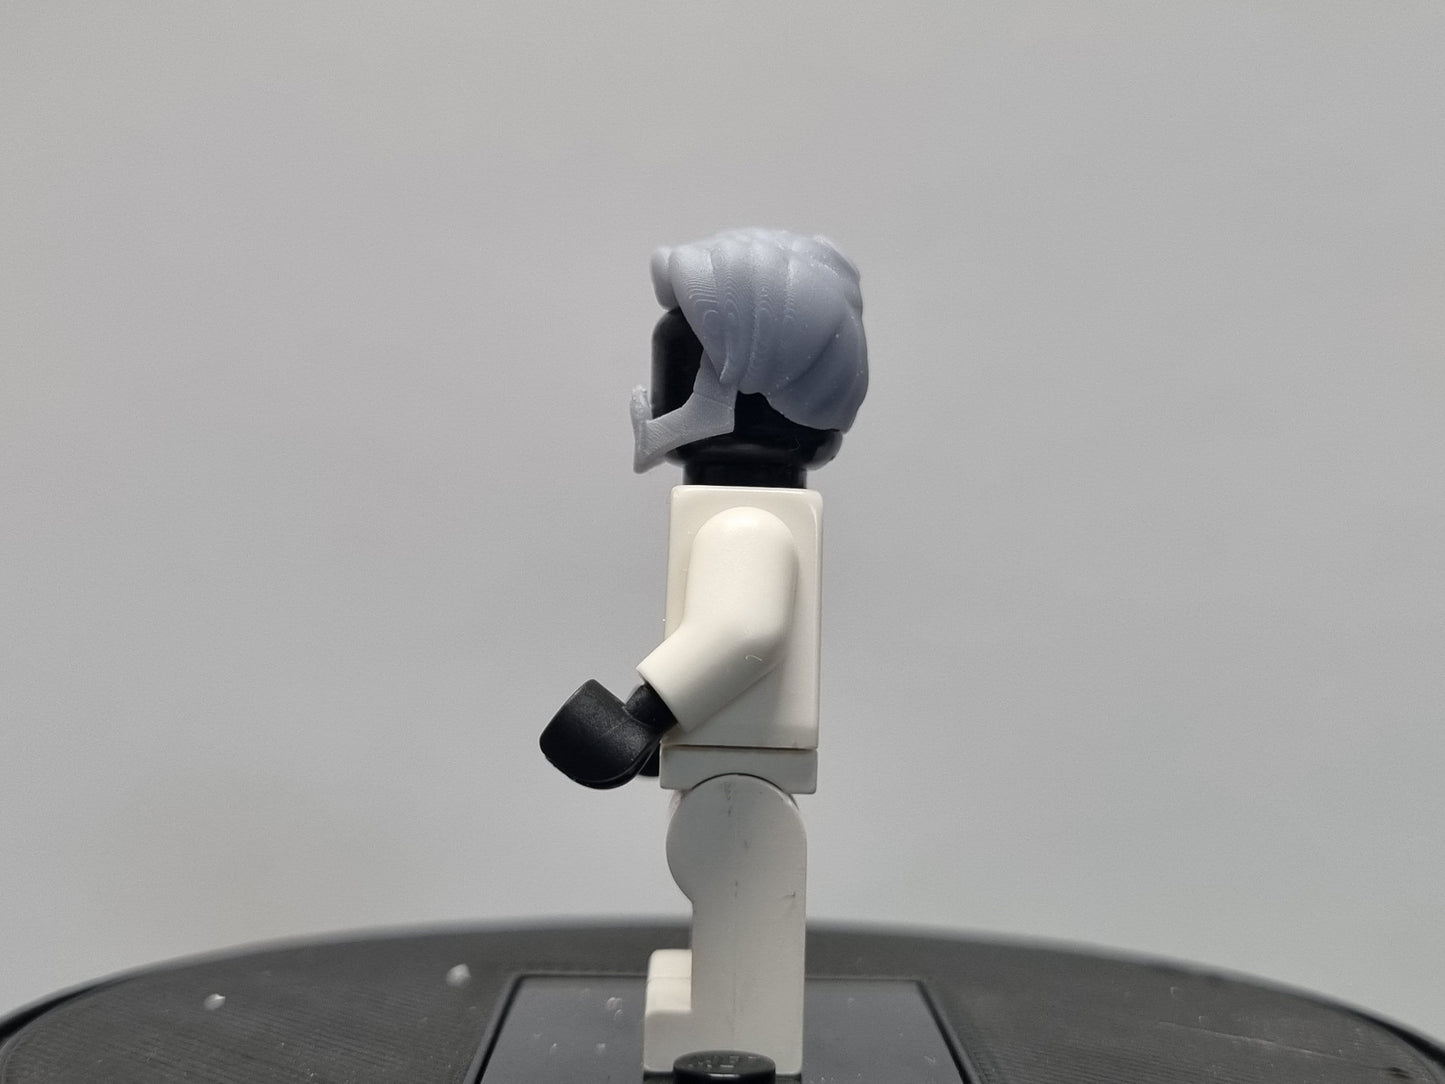 Building toy custom 3D printed galaxy wars beared knight!